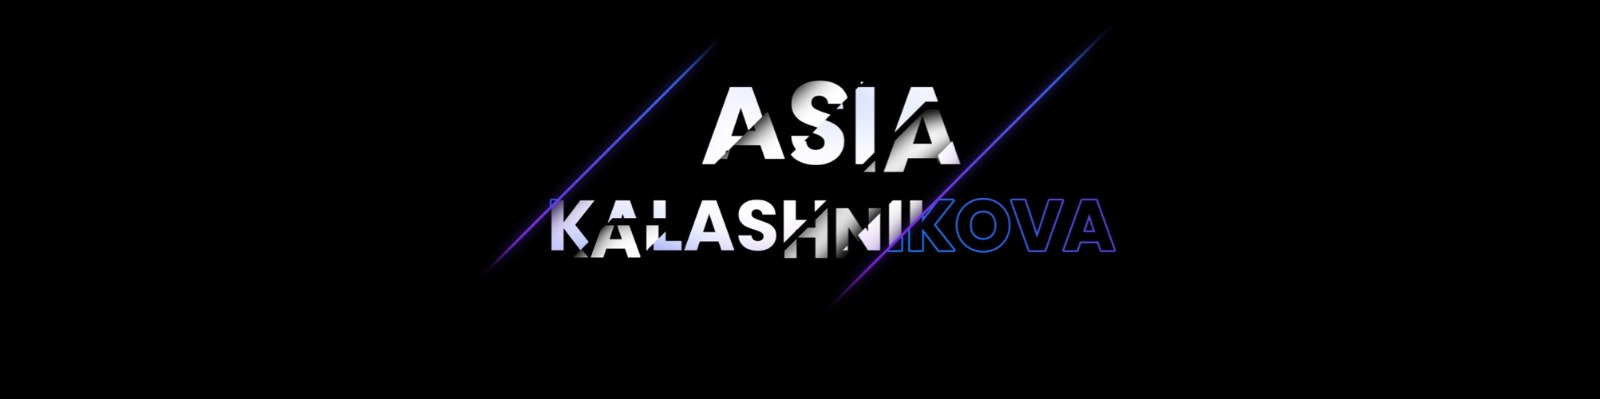 AsyaKalashnikova banner